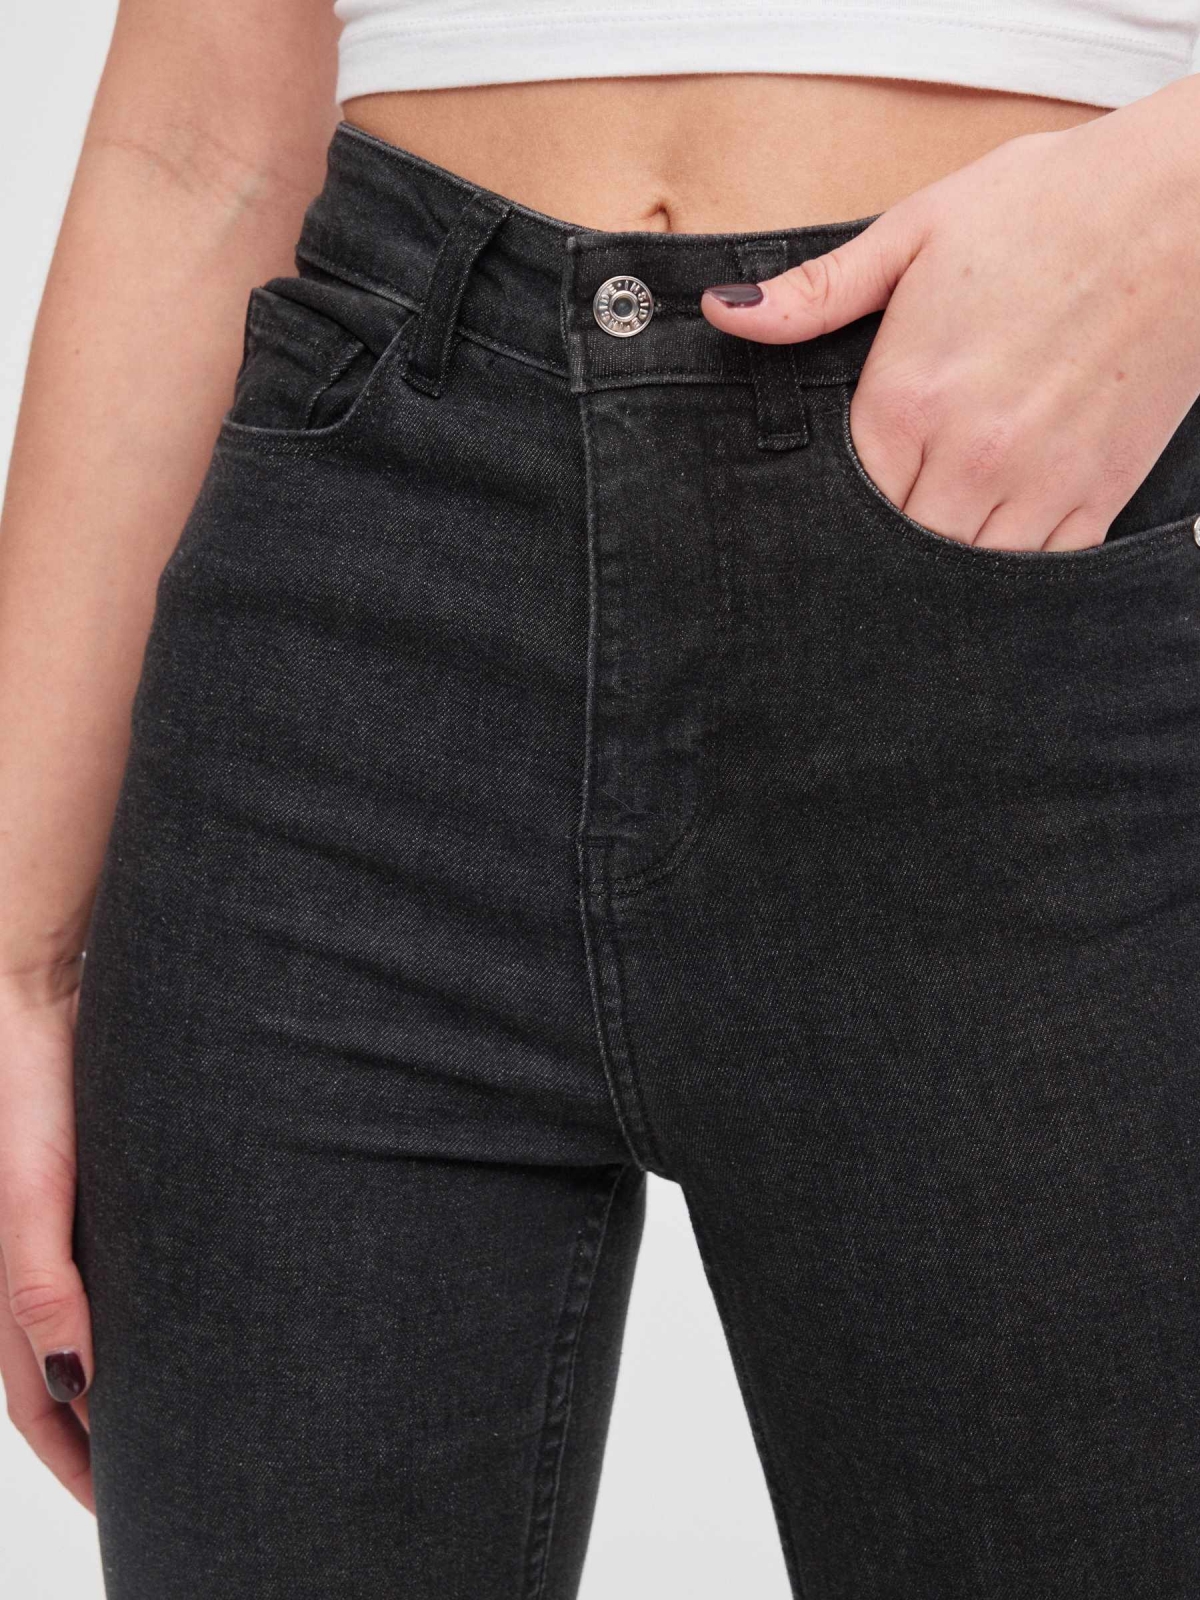 Black skinny jeans high rise black detail view